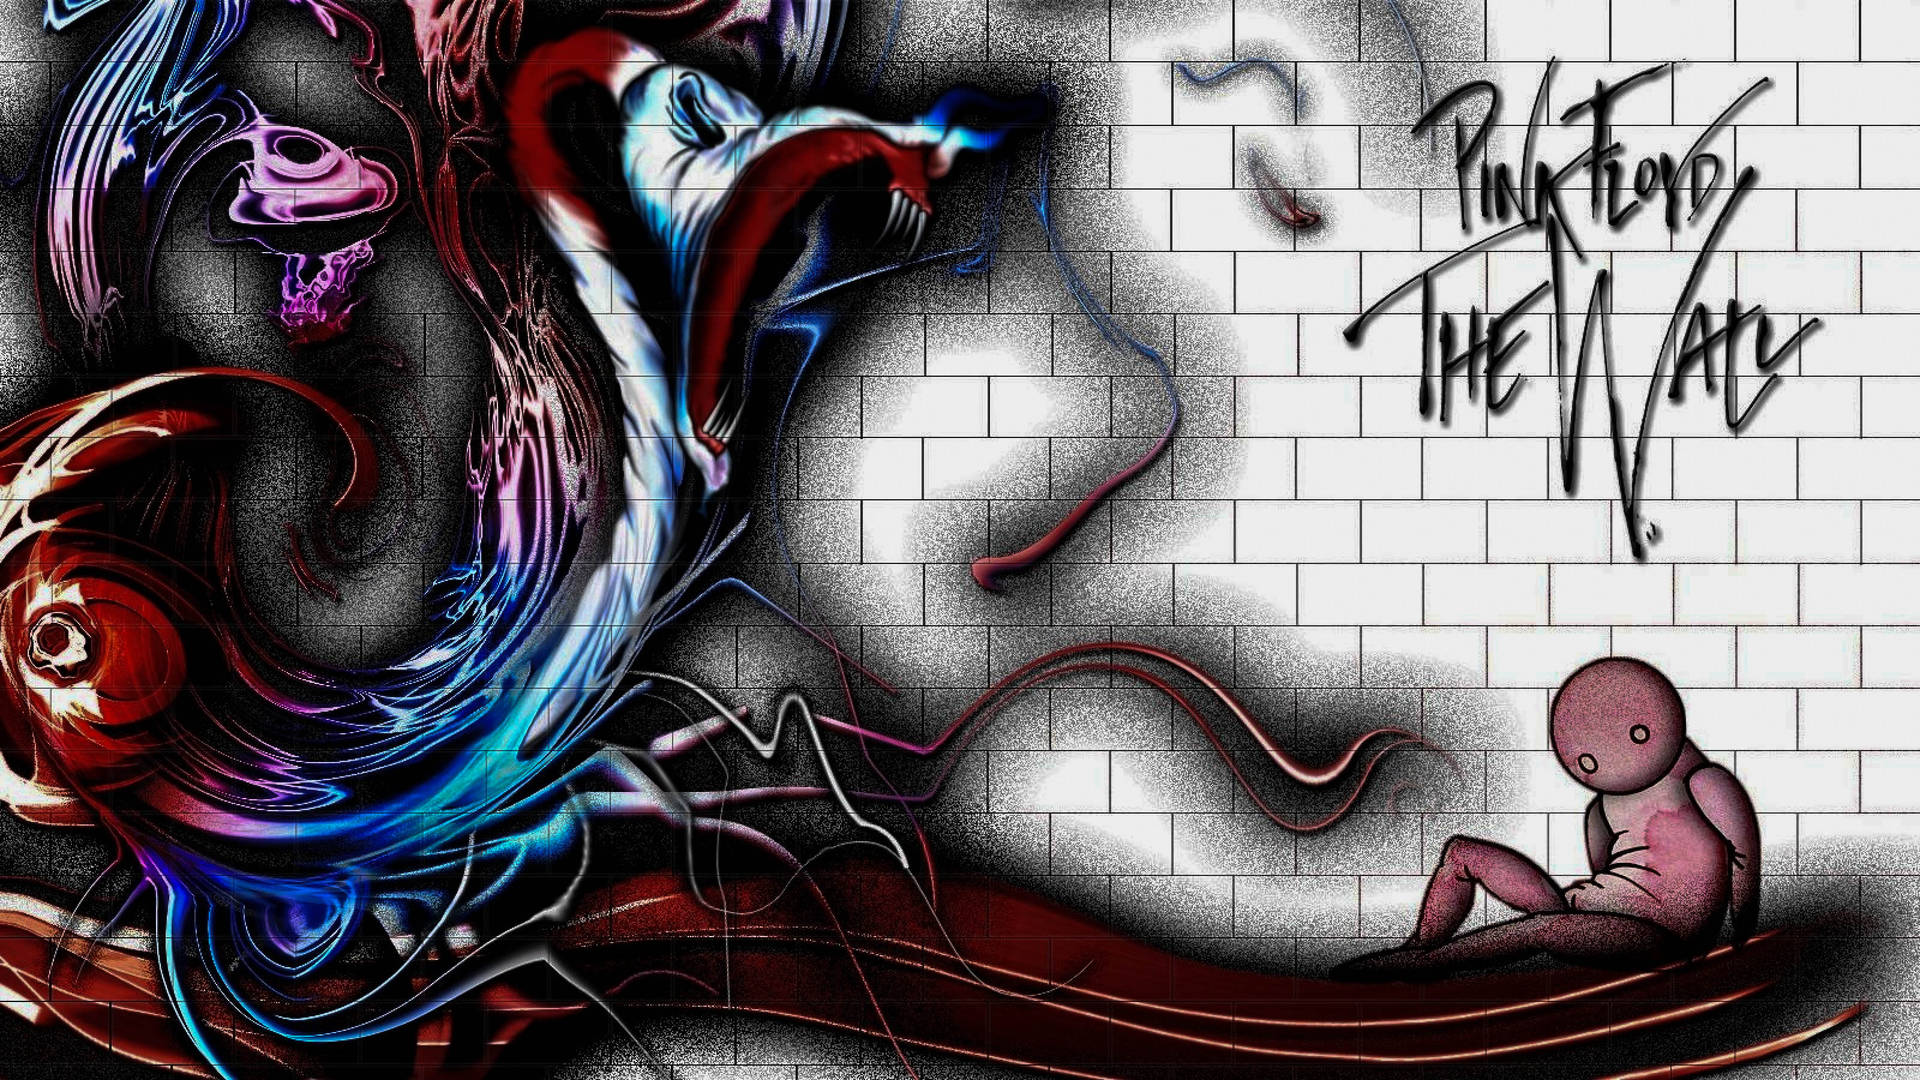 Pink Floyd 4k The Wall Graffiti Aesthetic